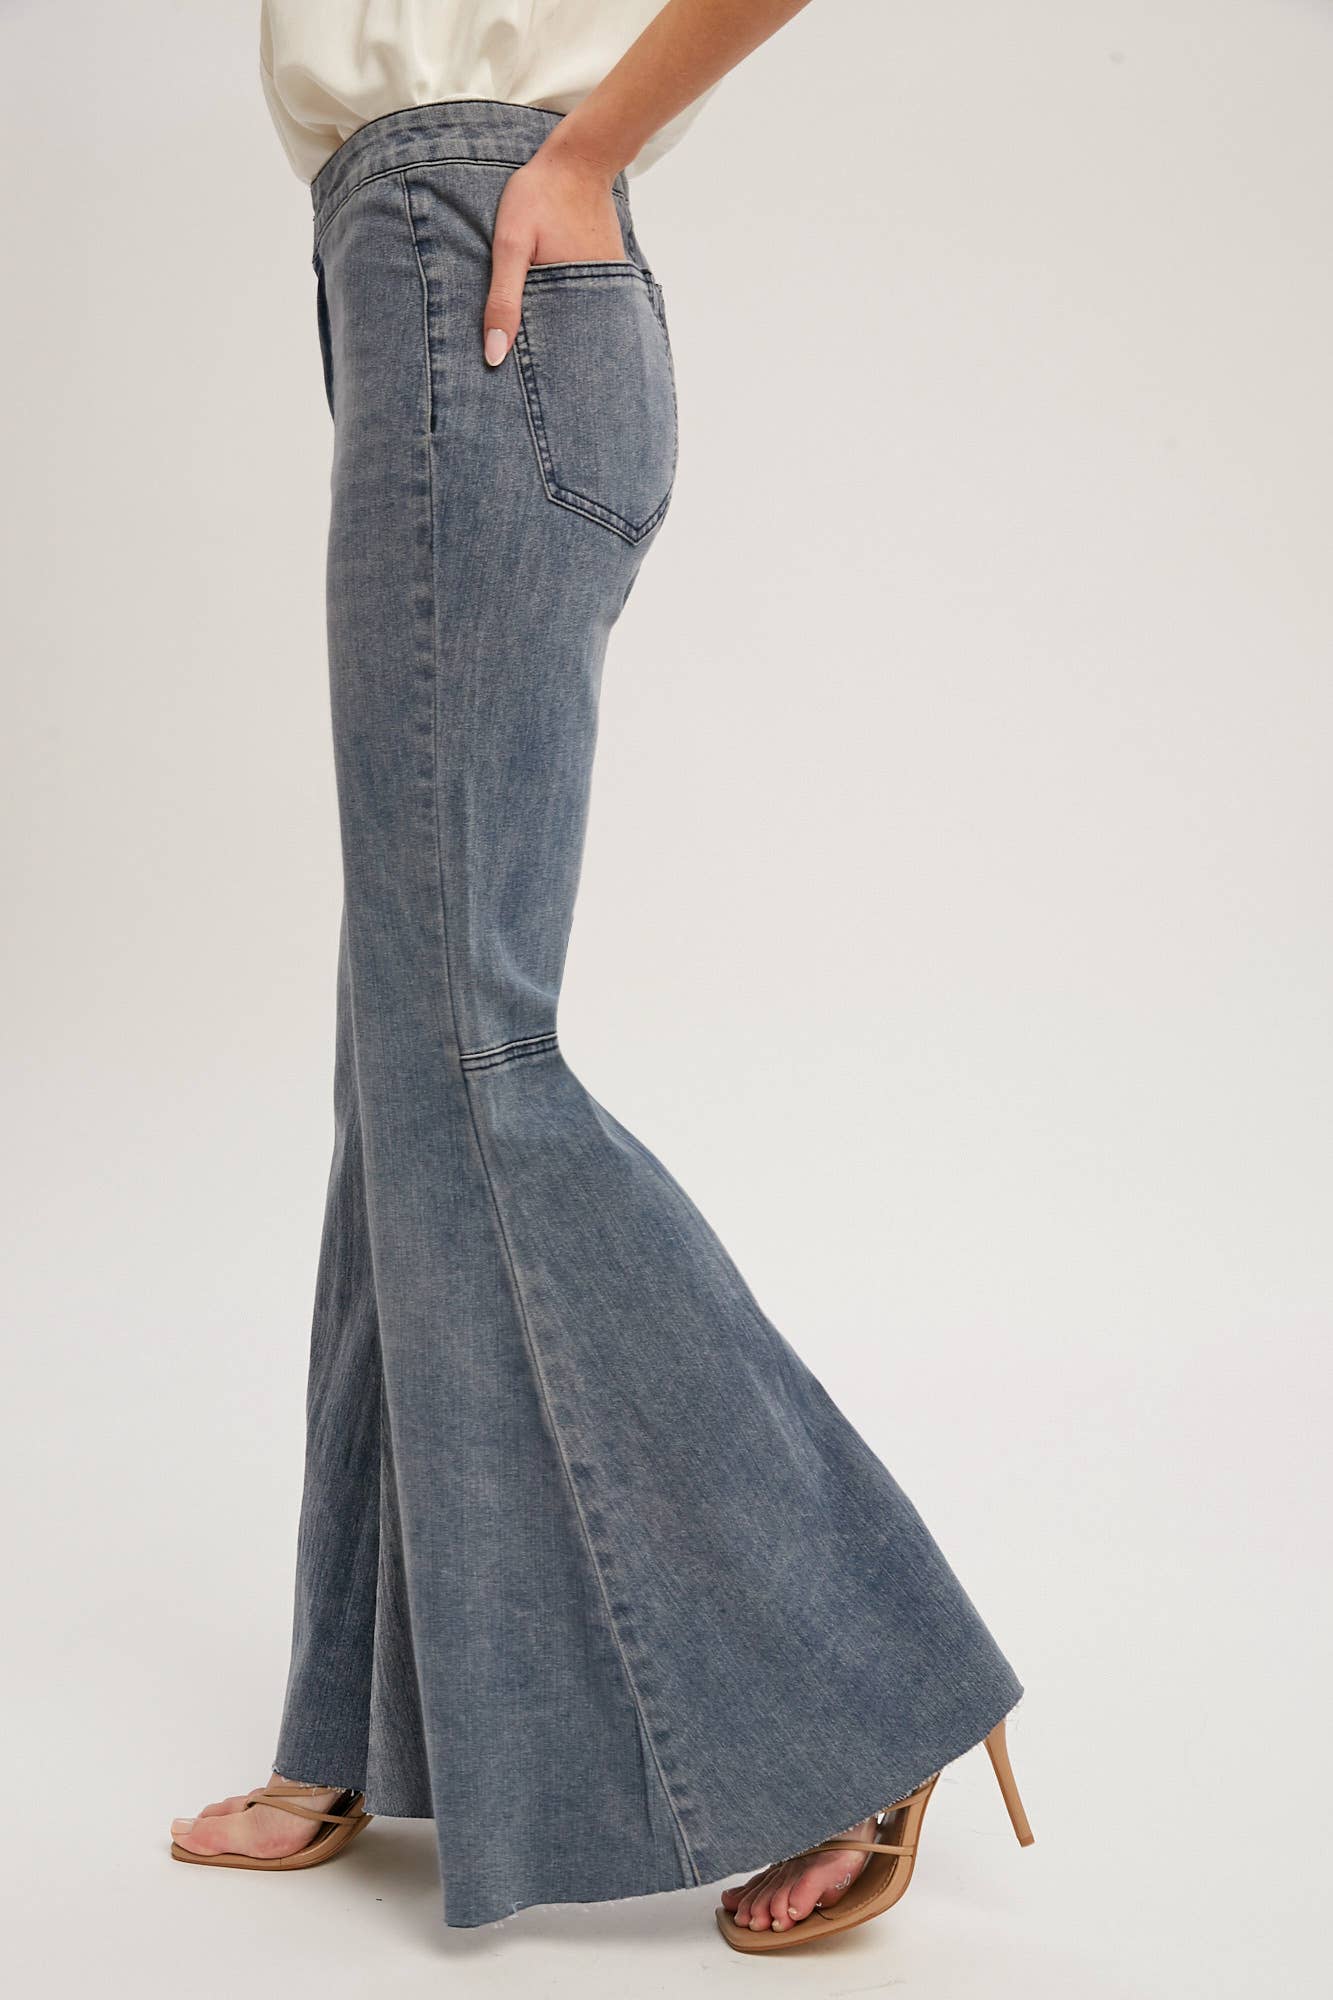 Bluivy Flare Bell Bottom Jean